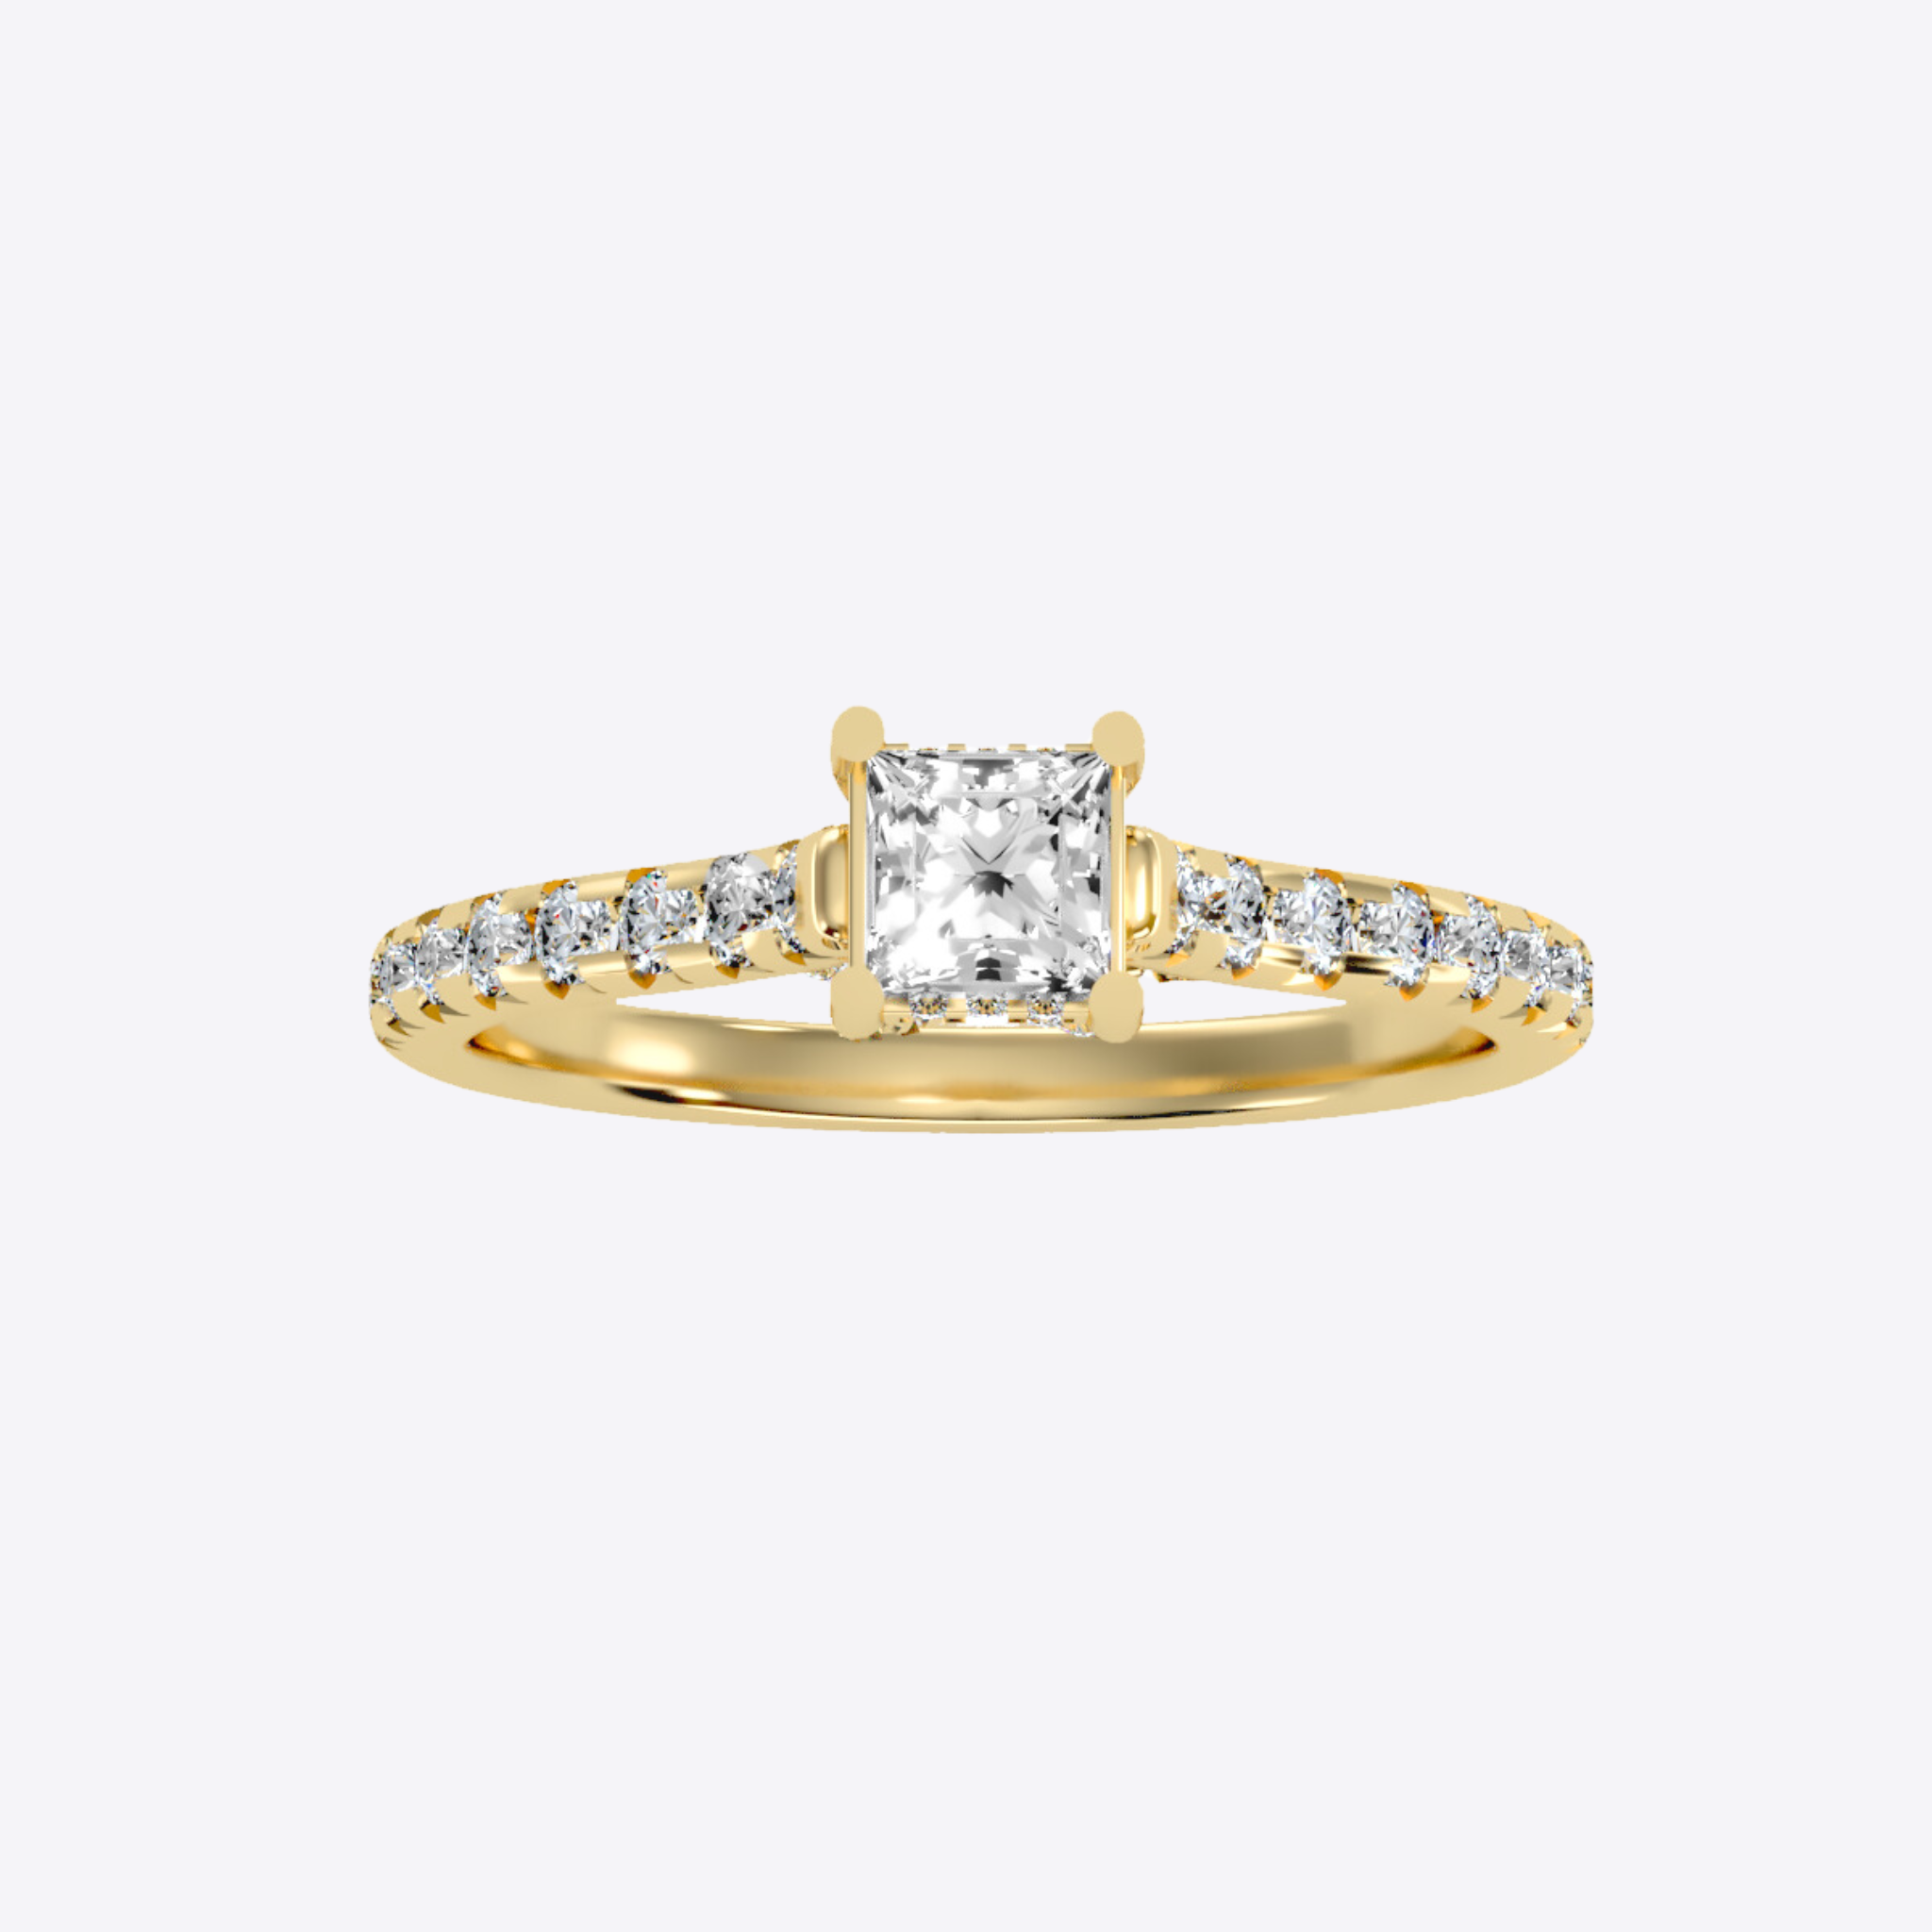 Amazon.com: Jewelry / Jewelry Wedding Engagement Ring | Beautiful  engagement rings, Engagement ring cuts, Engagement rings